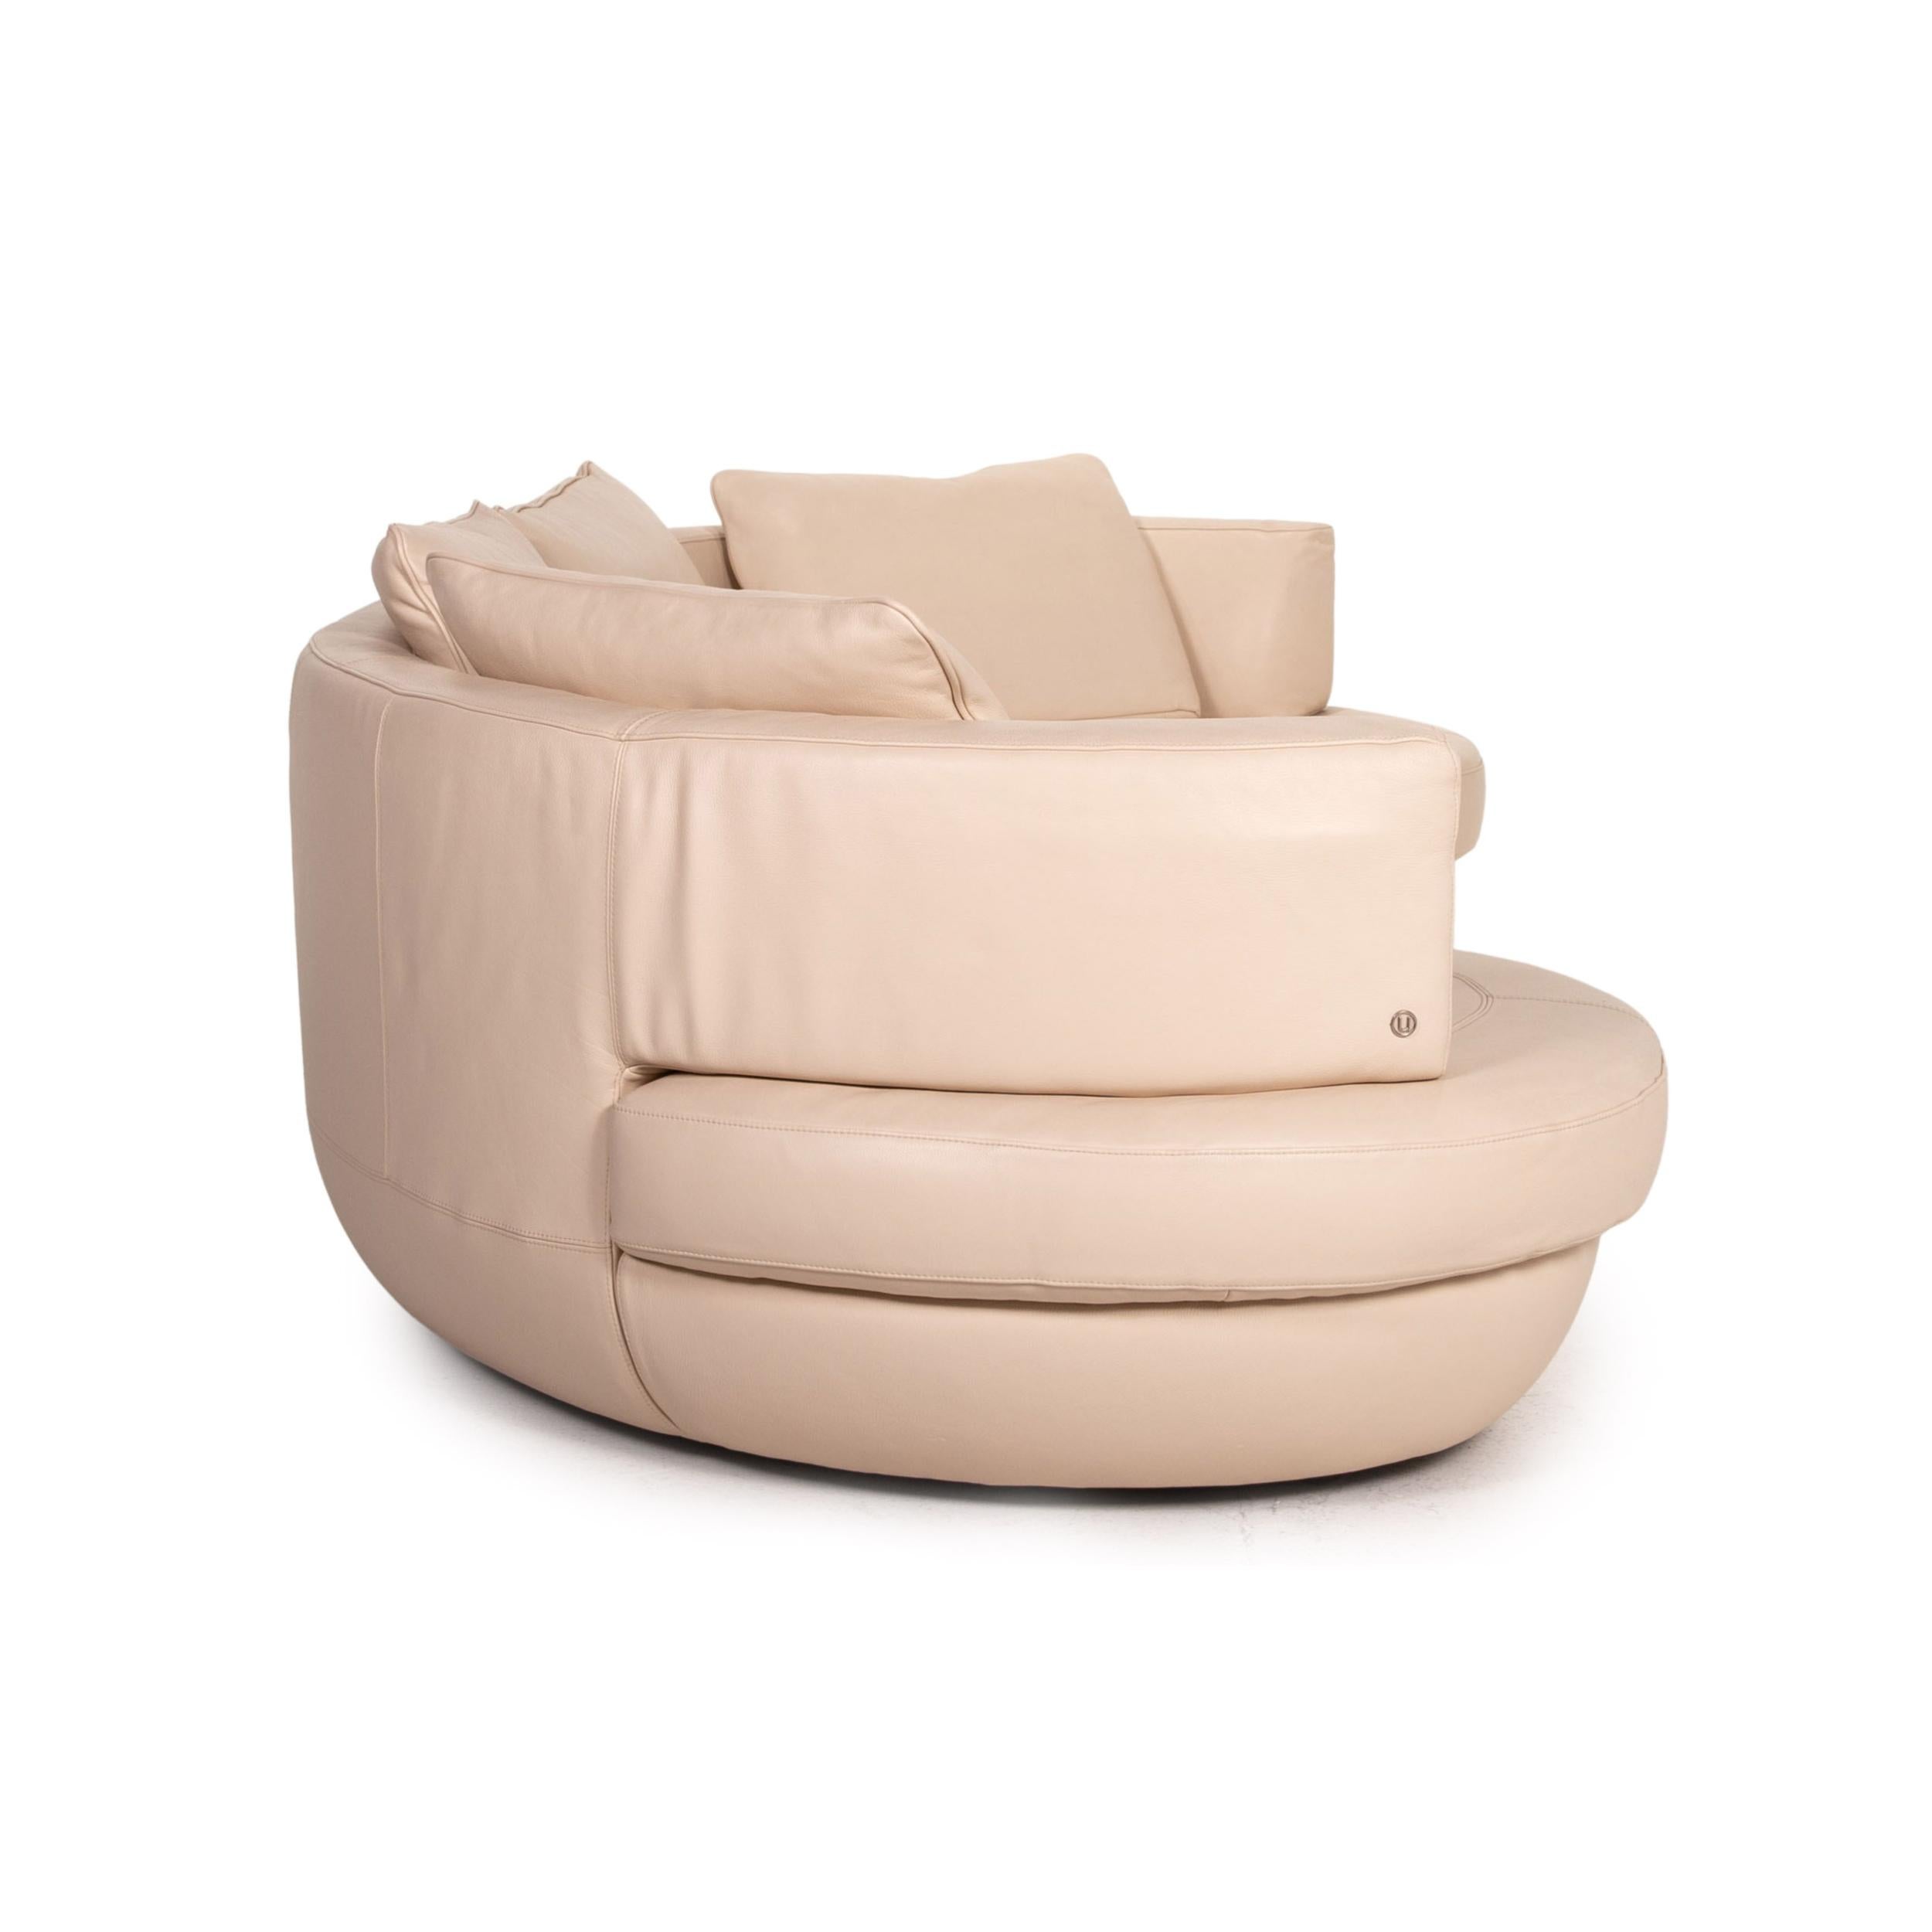 Glass Natuzzi Leather Corner Sofa Cream Function Sofa Couch For Sale